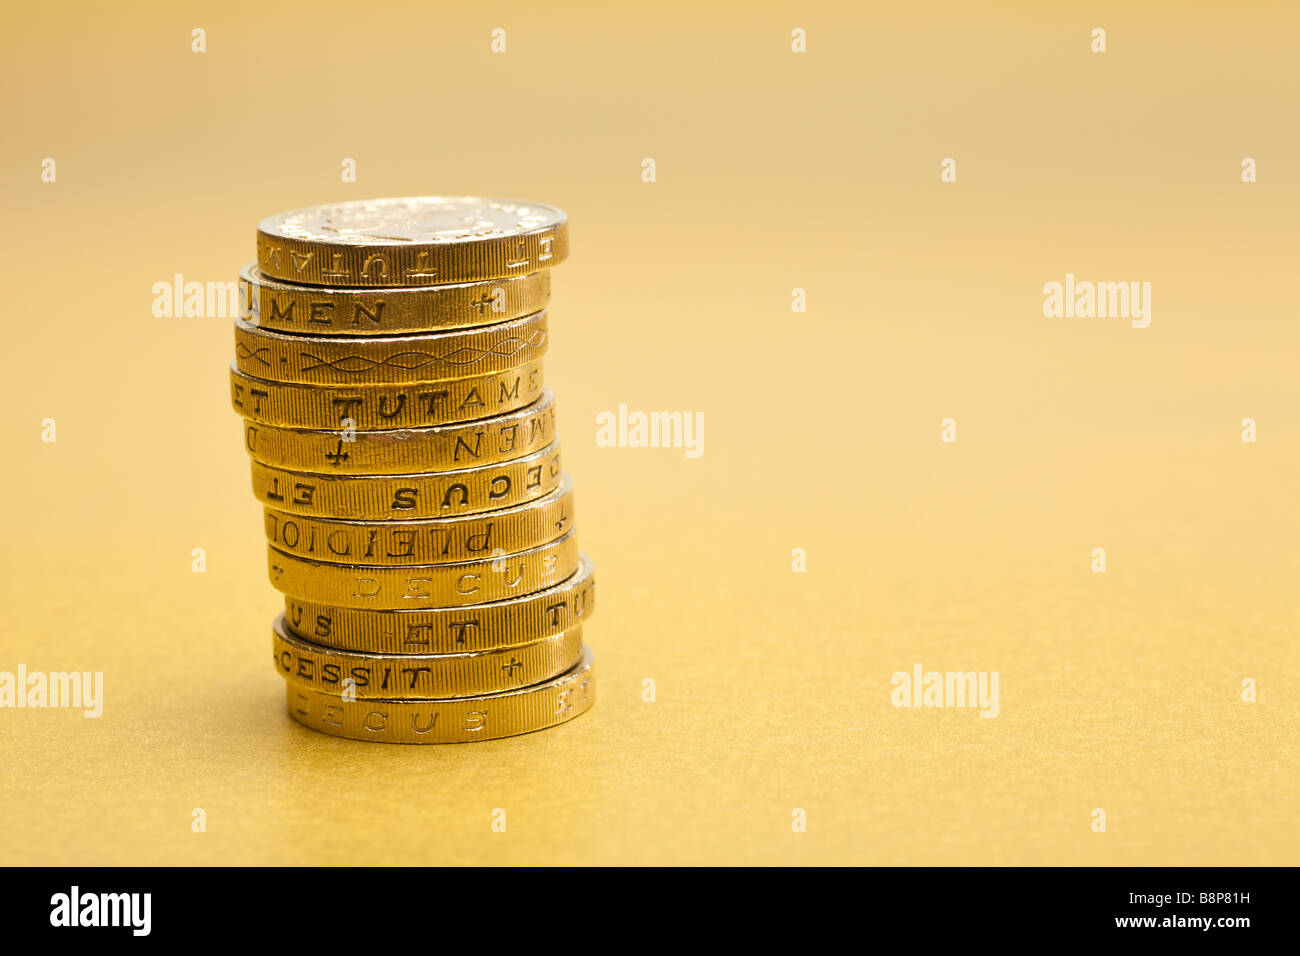 Pila de £1 monedas de una libra esterlina sobre fondo de oro Foto de stock